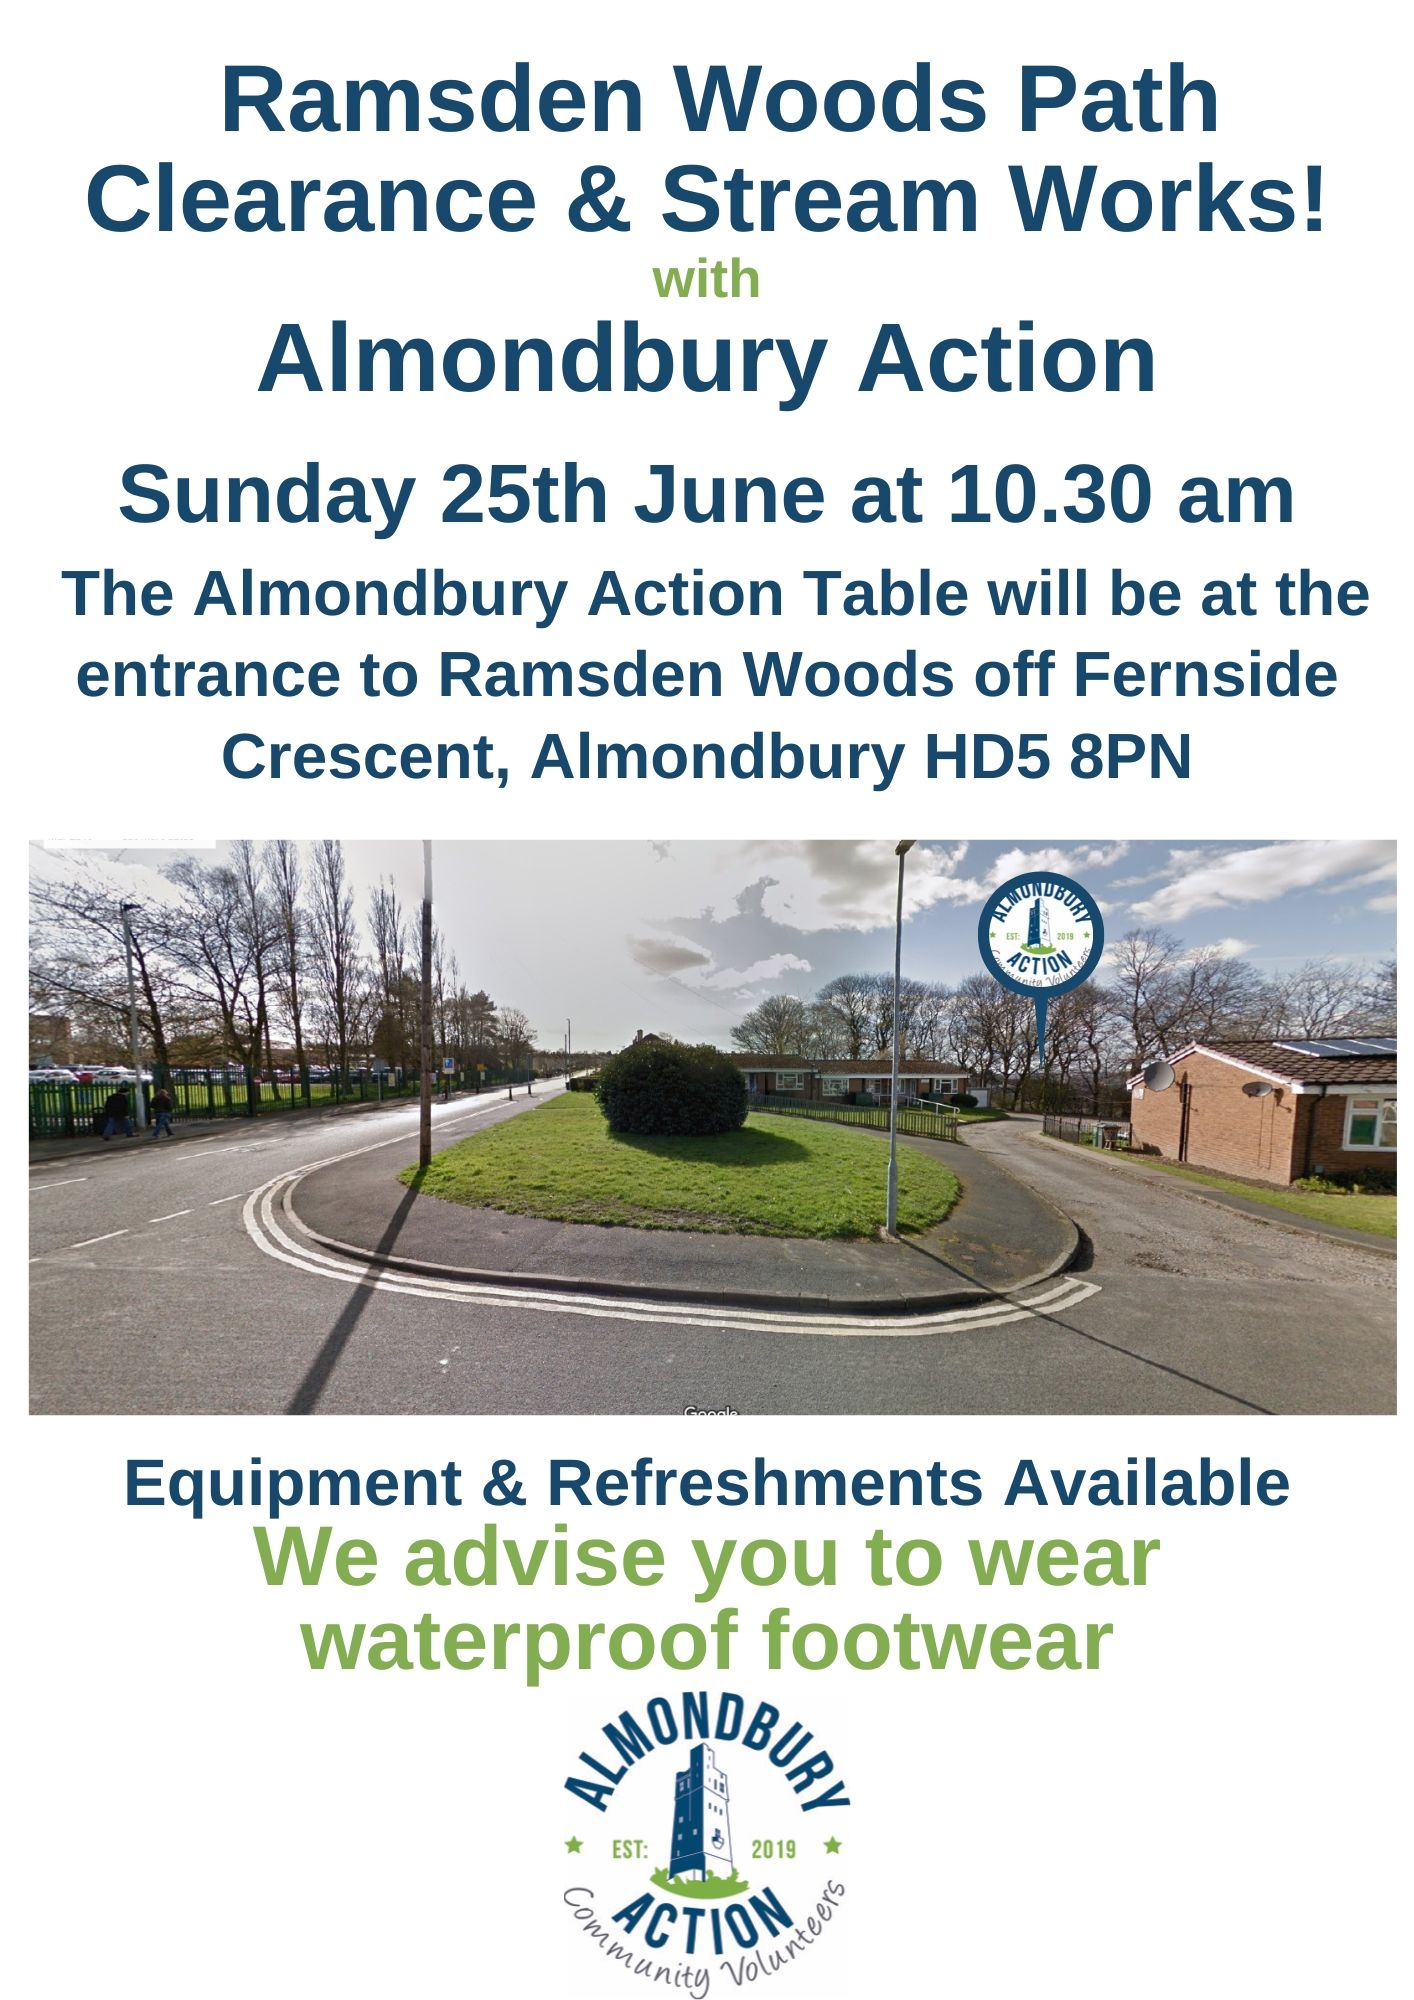 Almondbury Action Ramsden Woods Clearance Works